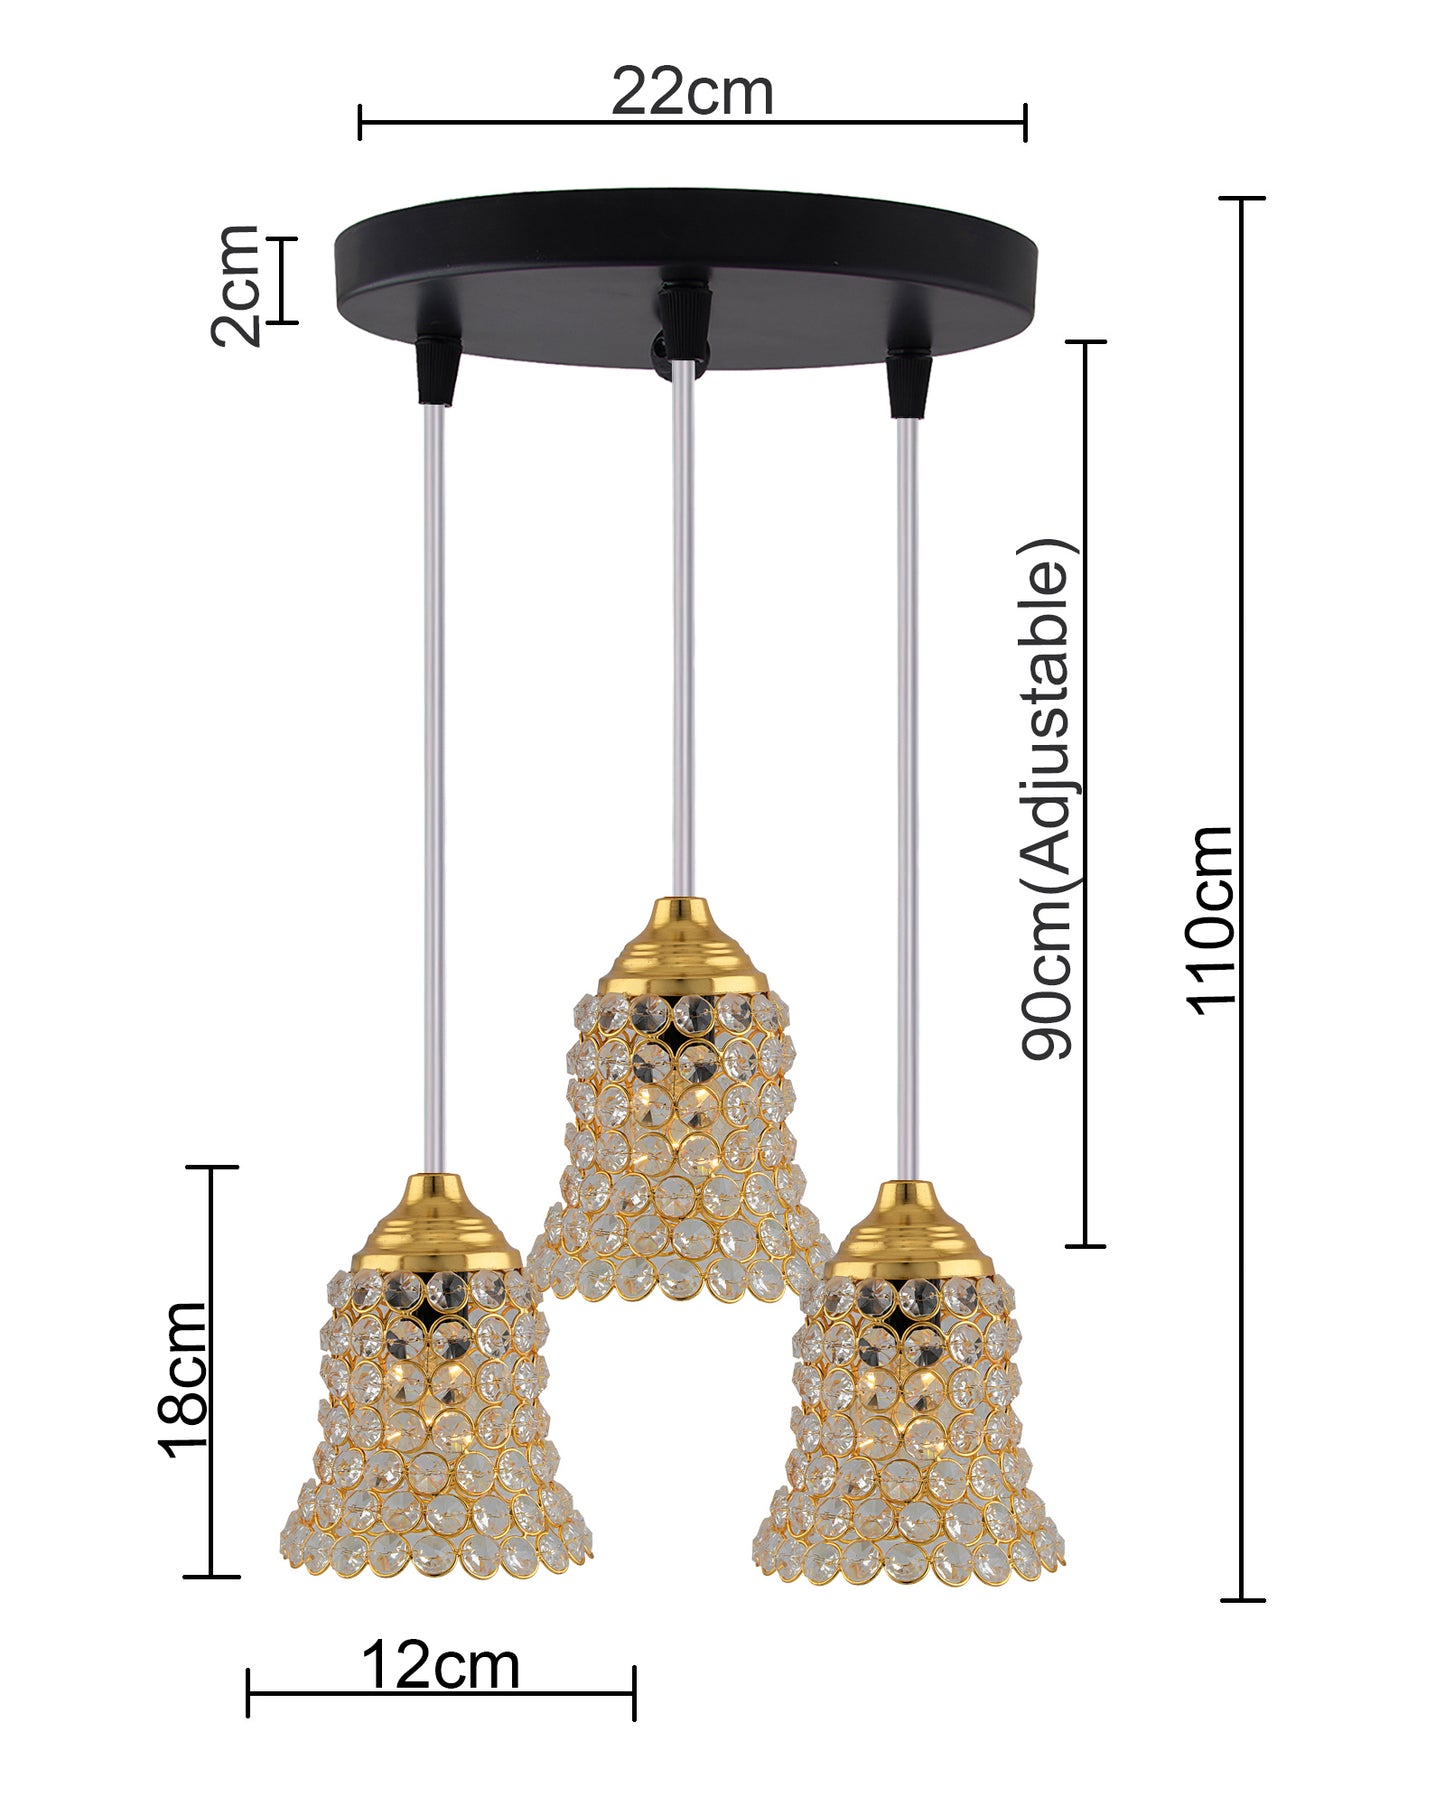 3-Lights Round Golden Cluster Chandelier Crystal Bell Hanging Light, E27 Holder, Decorative, URBAN Retro, Nordic Style, LED/Filament Bulb